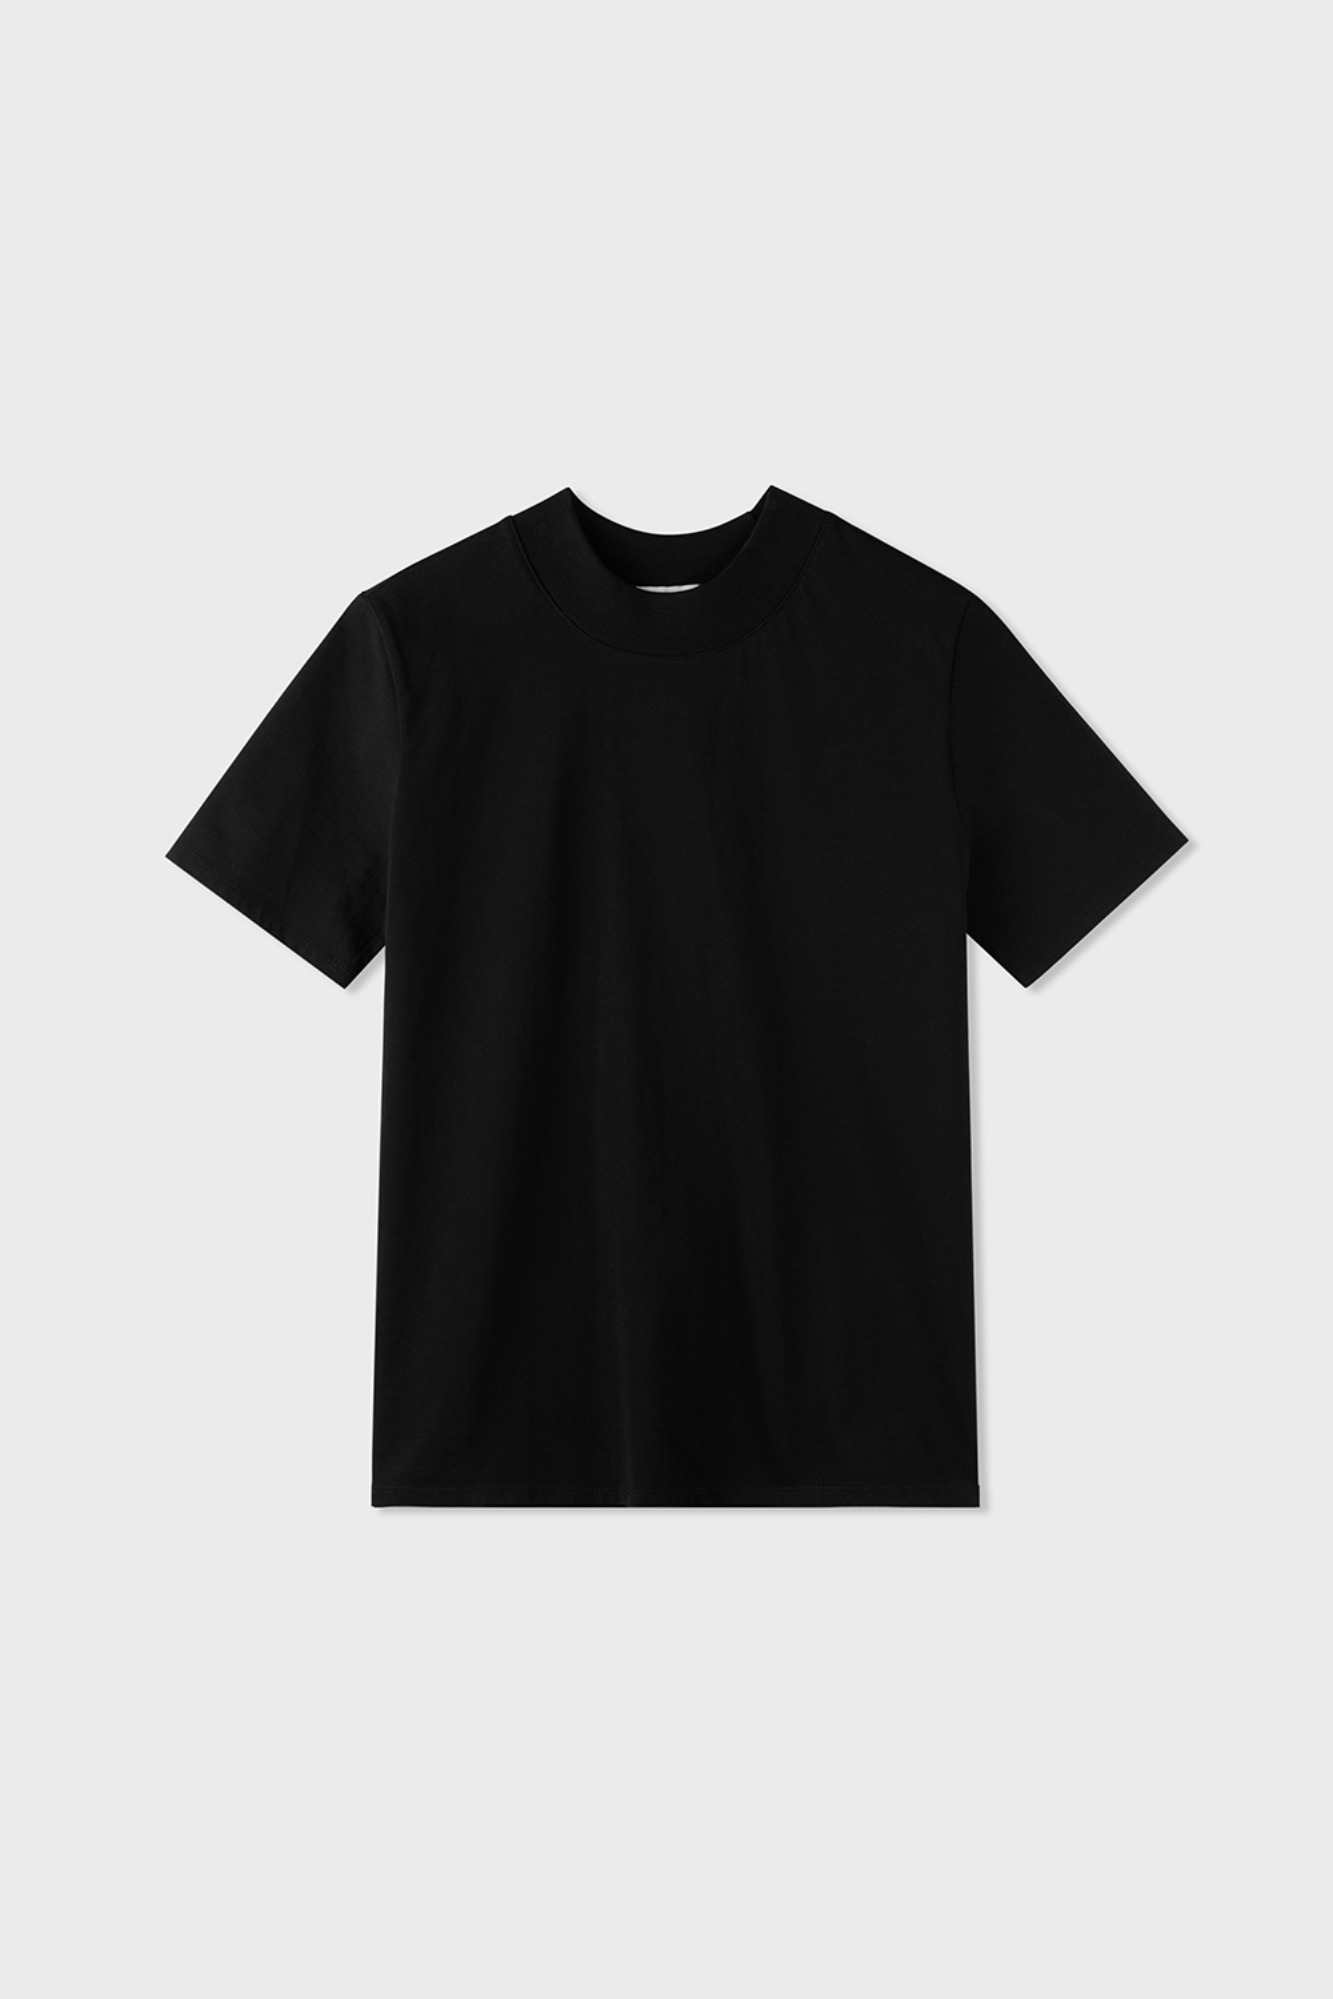 Carso Black T-Shirt